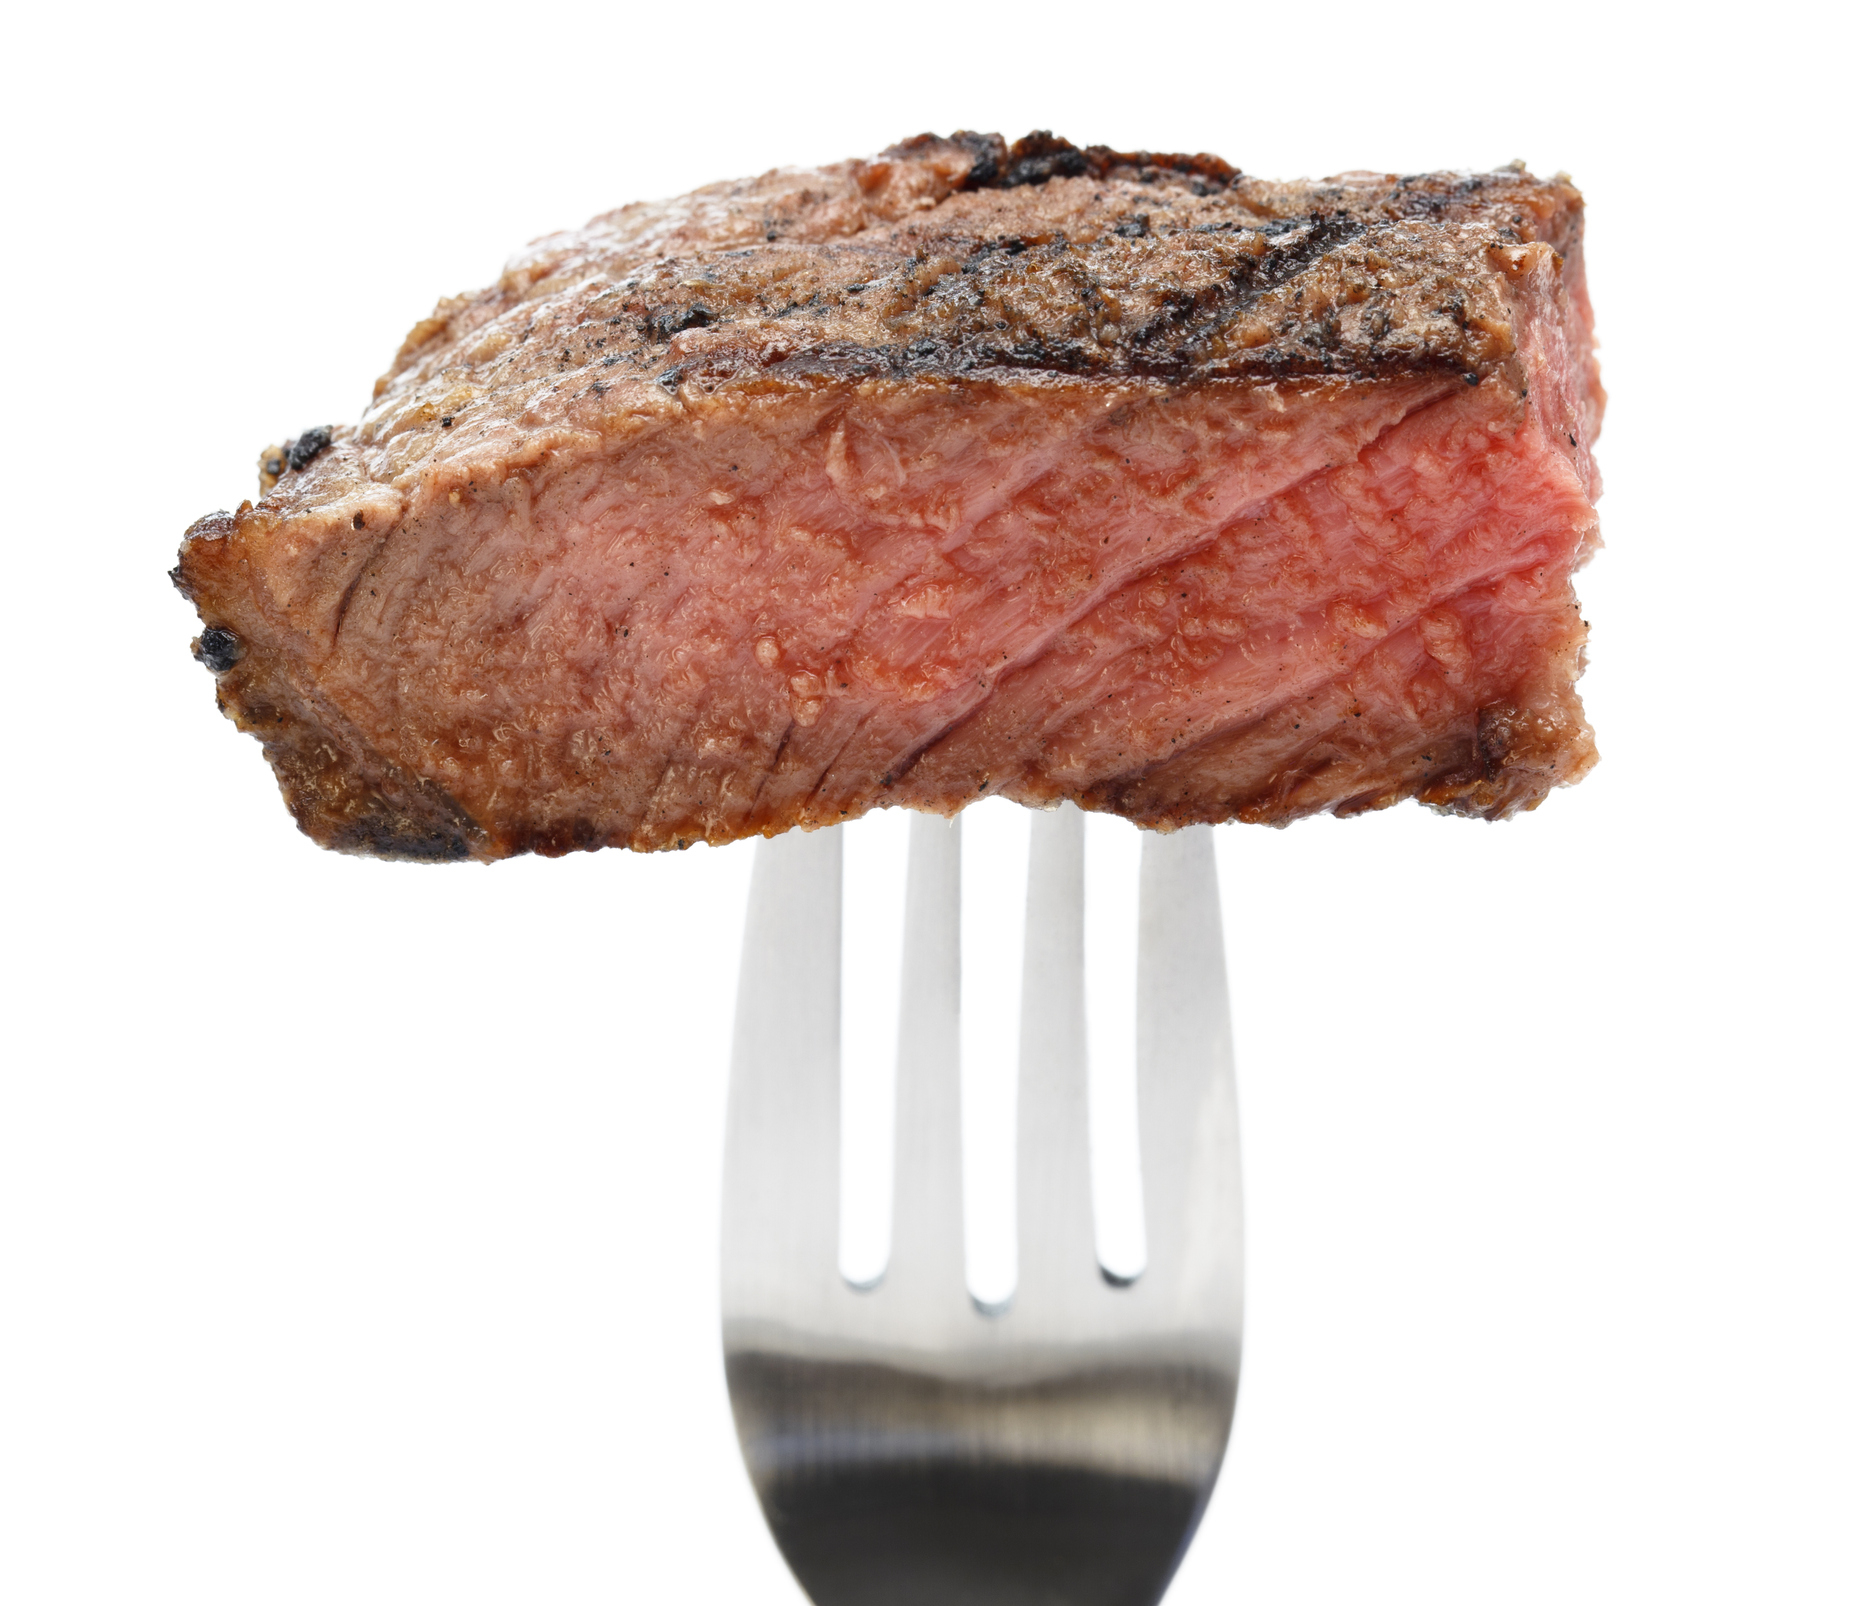 A piece of steak on a fork